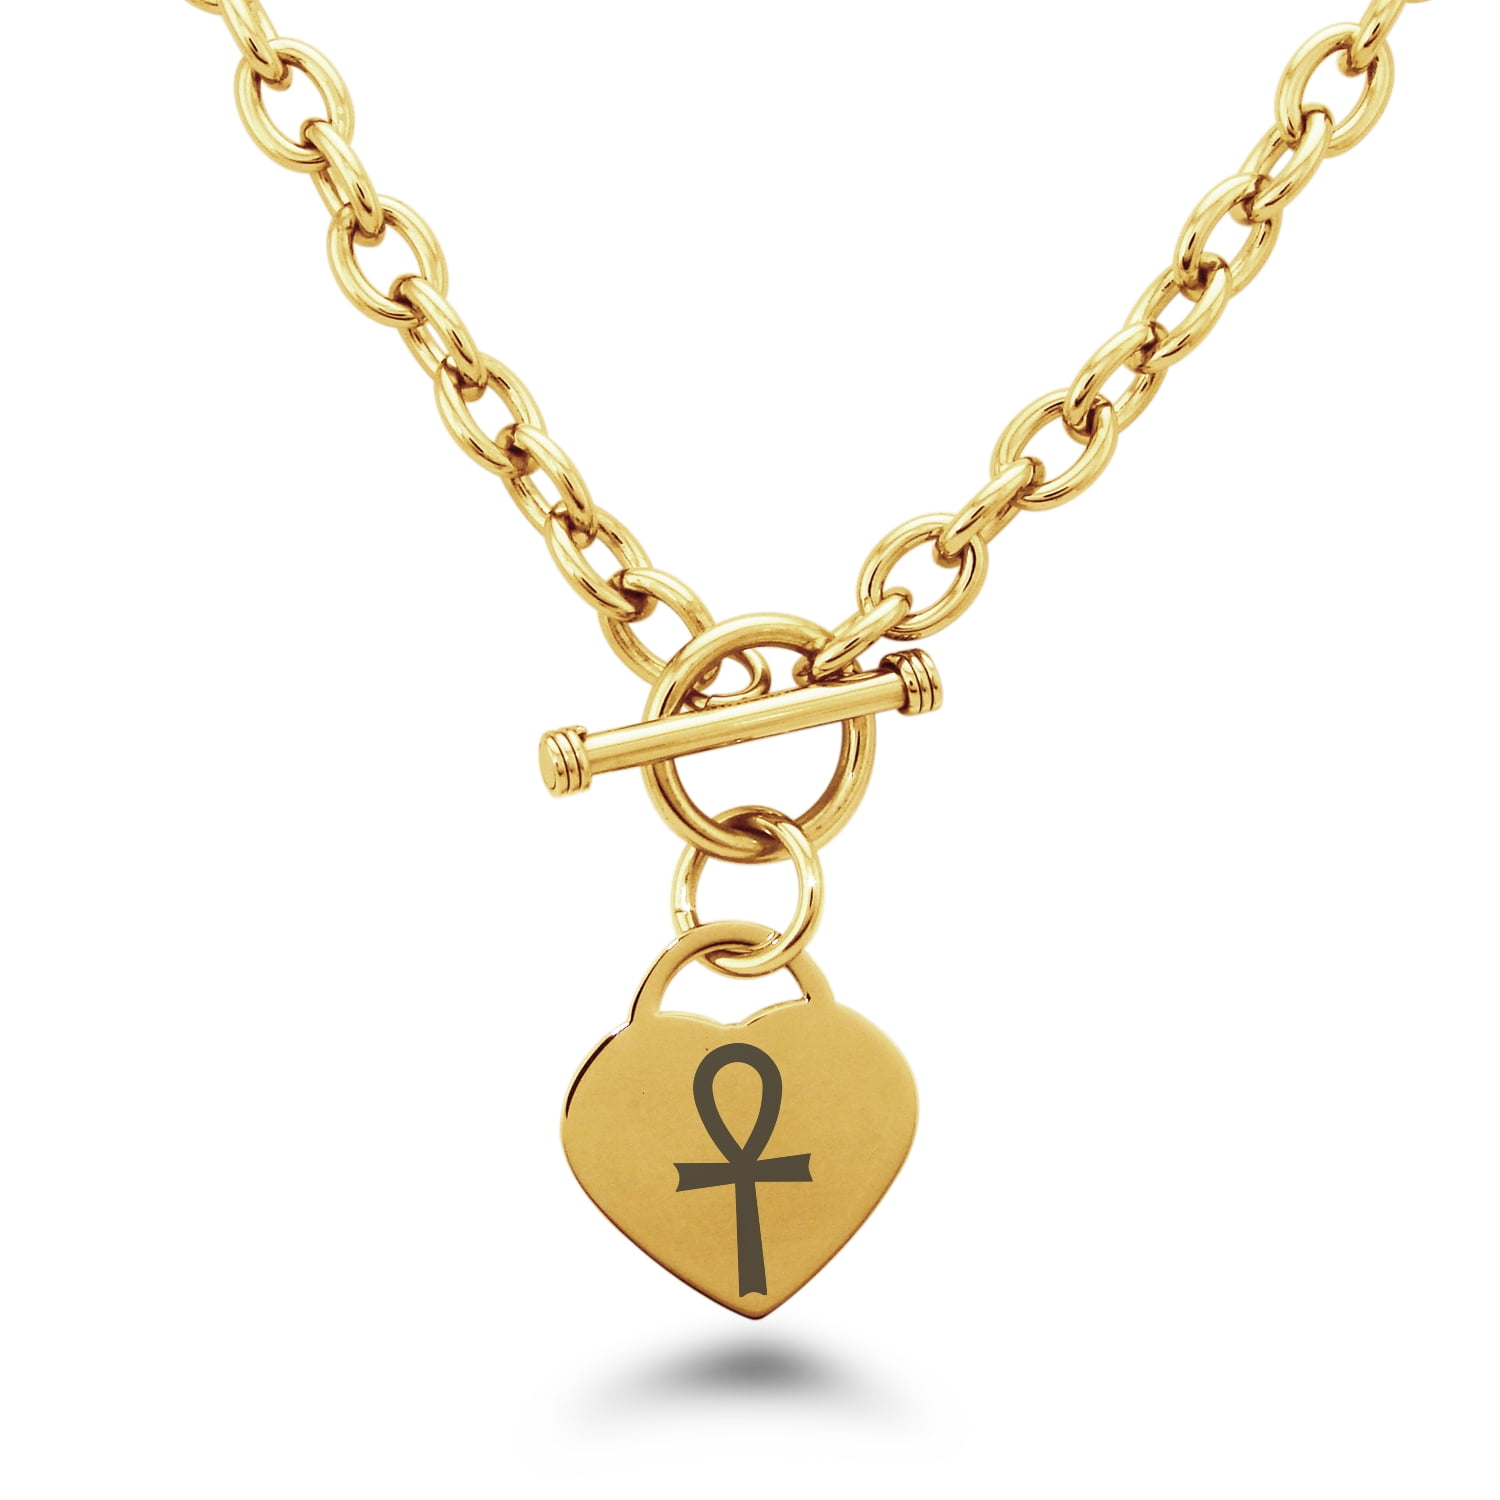 Tioneer Stainless Steel Egyptian Ankh Cross Symbols Heart Charm Bracelet & Necklace